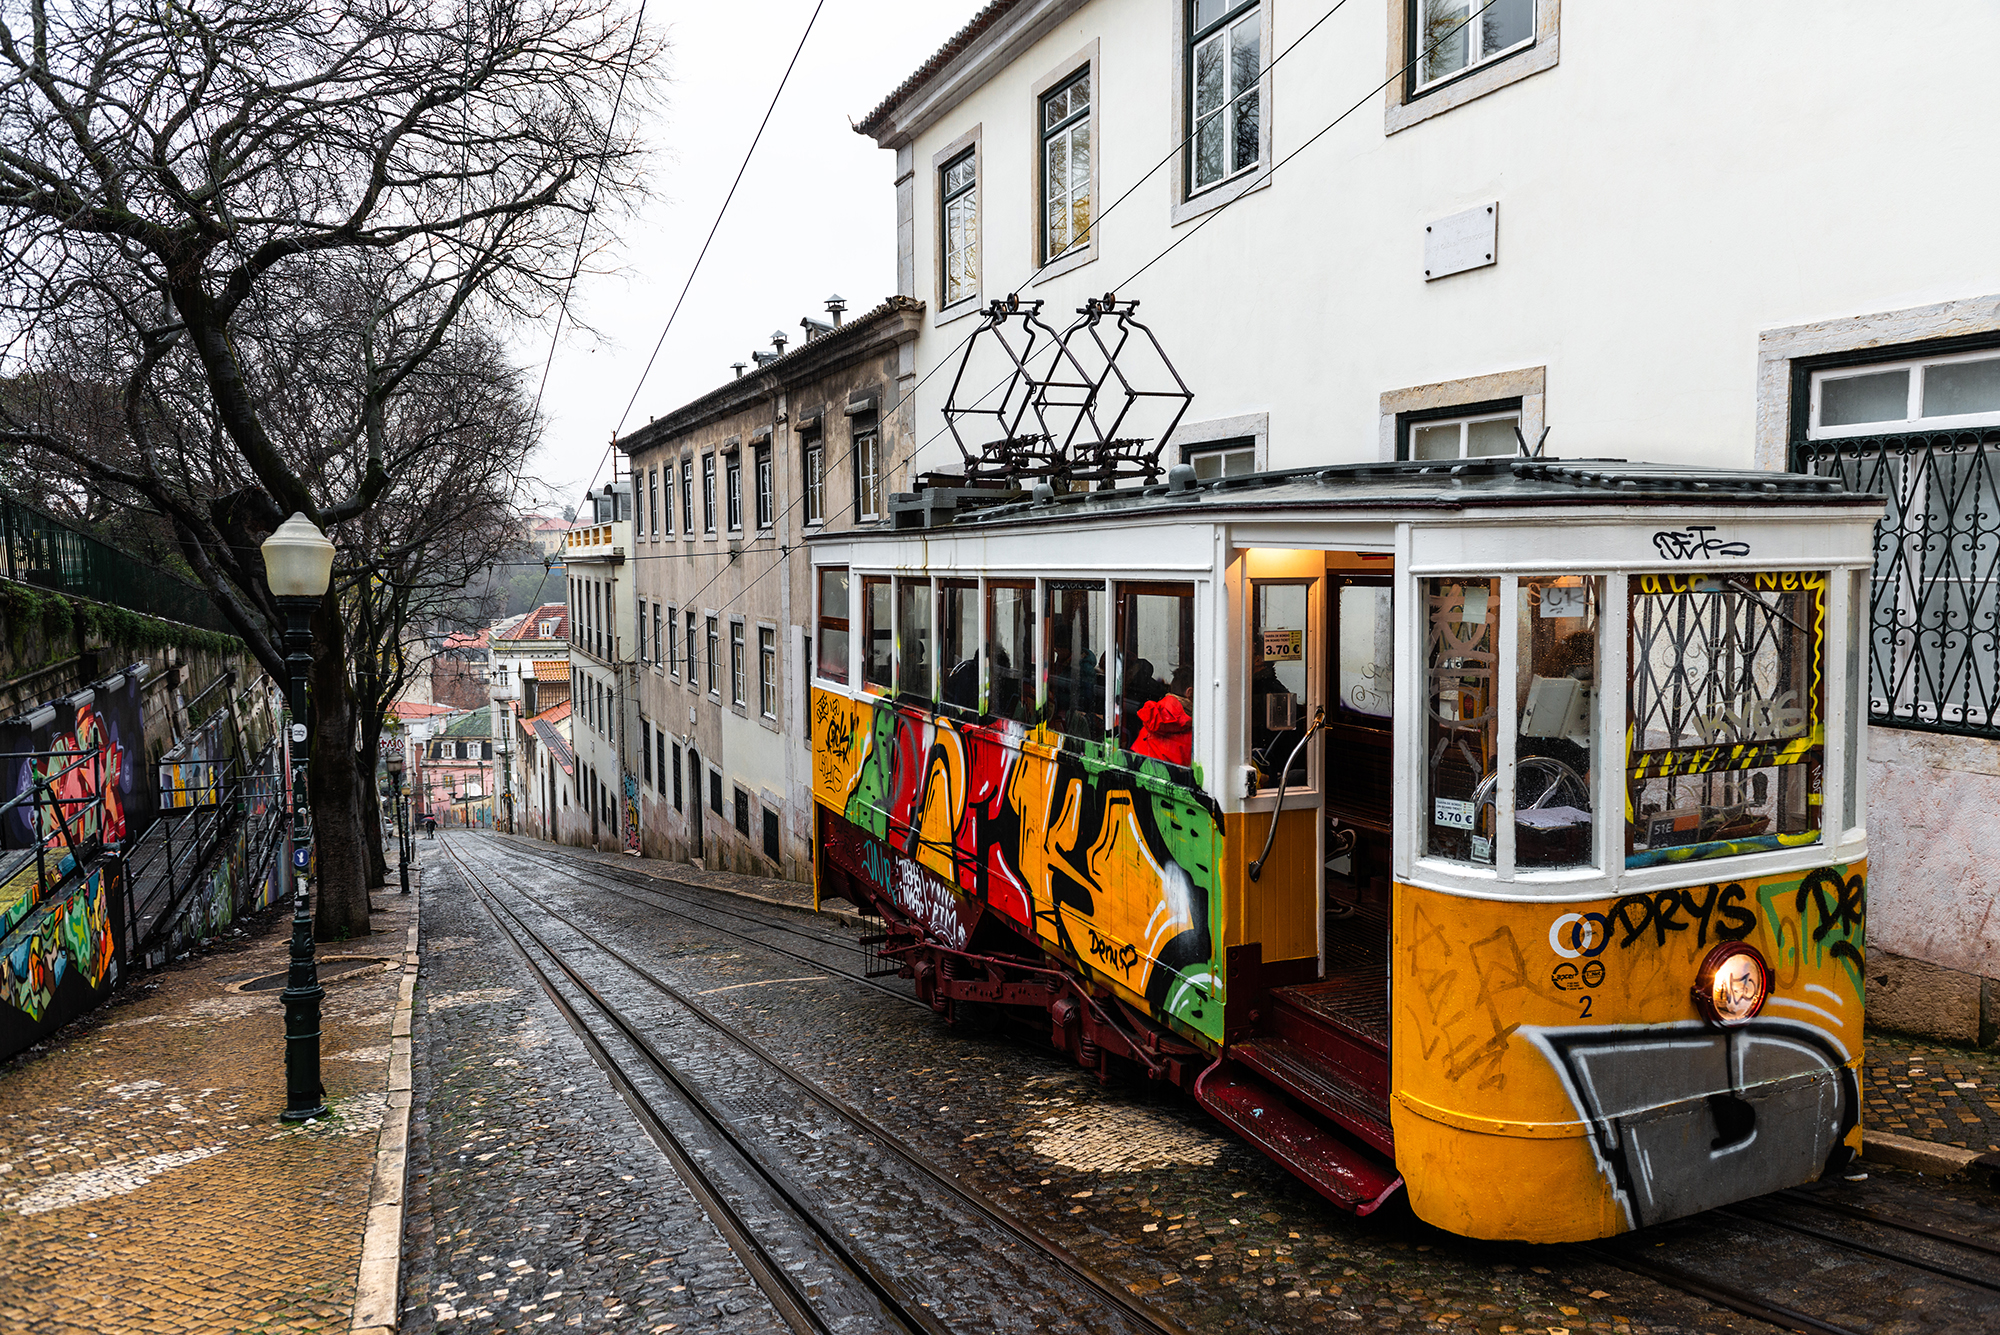 Ascensor da Gloria in Lisbon